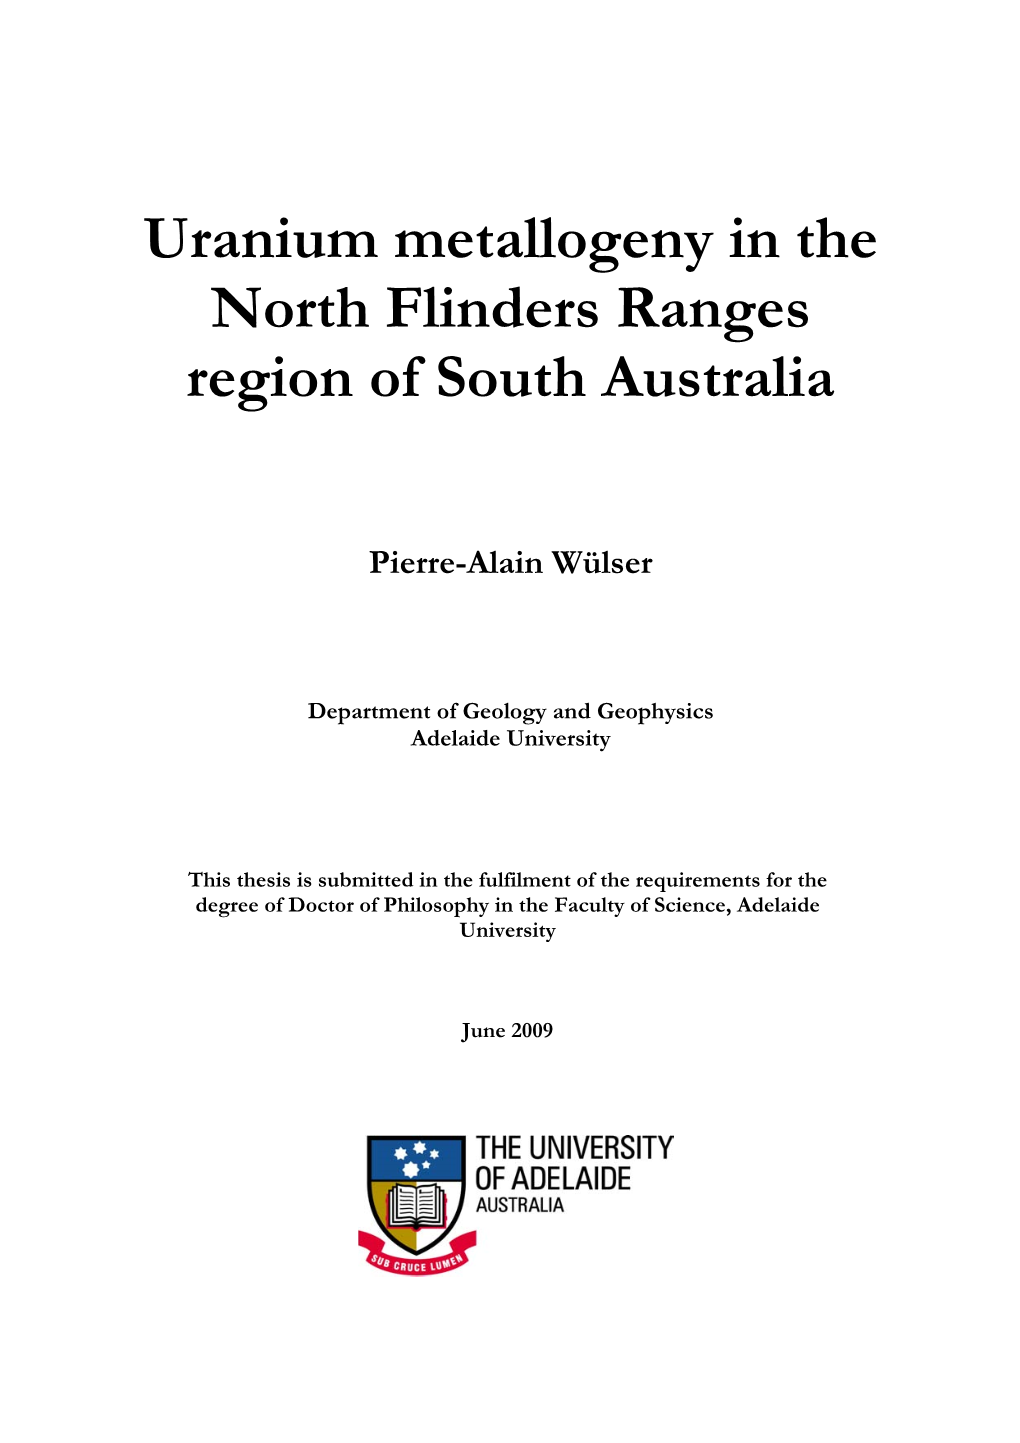 Uranium Metallogeny in the North Flinders Ranges Region of South Australia